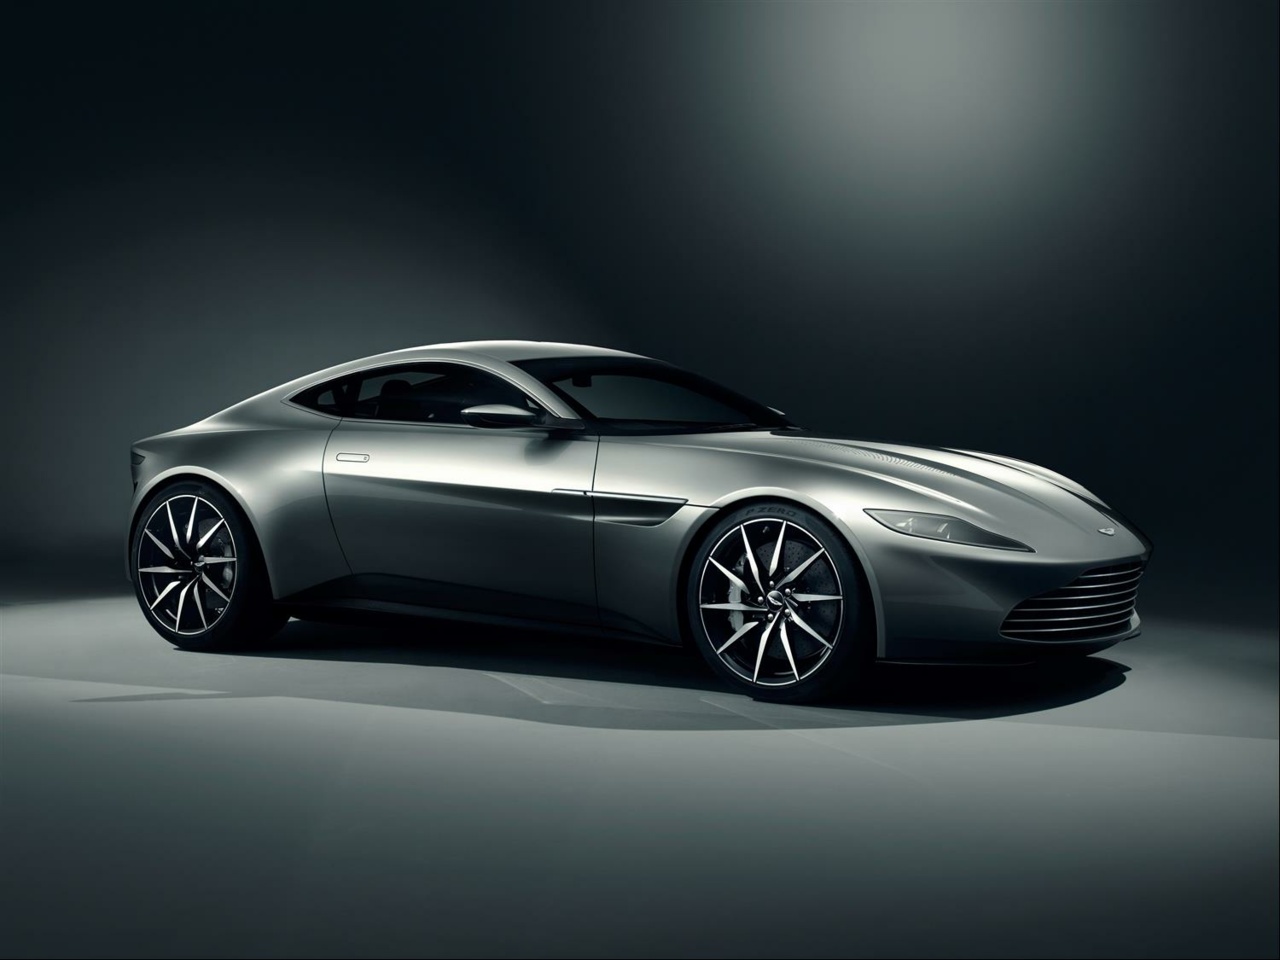 James Bond Aston Martin DB10